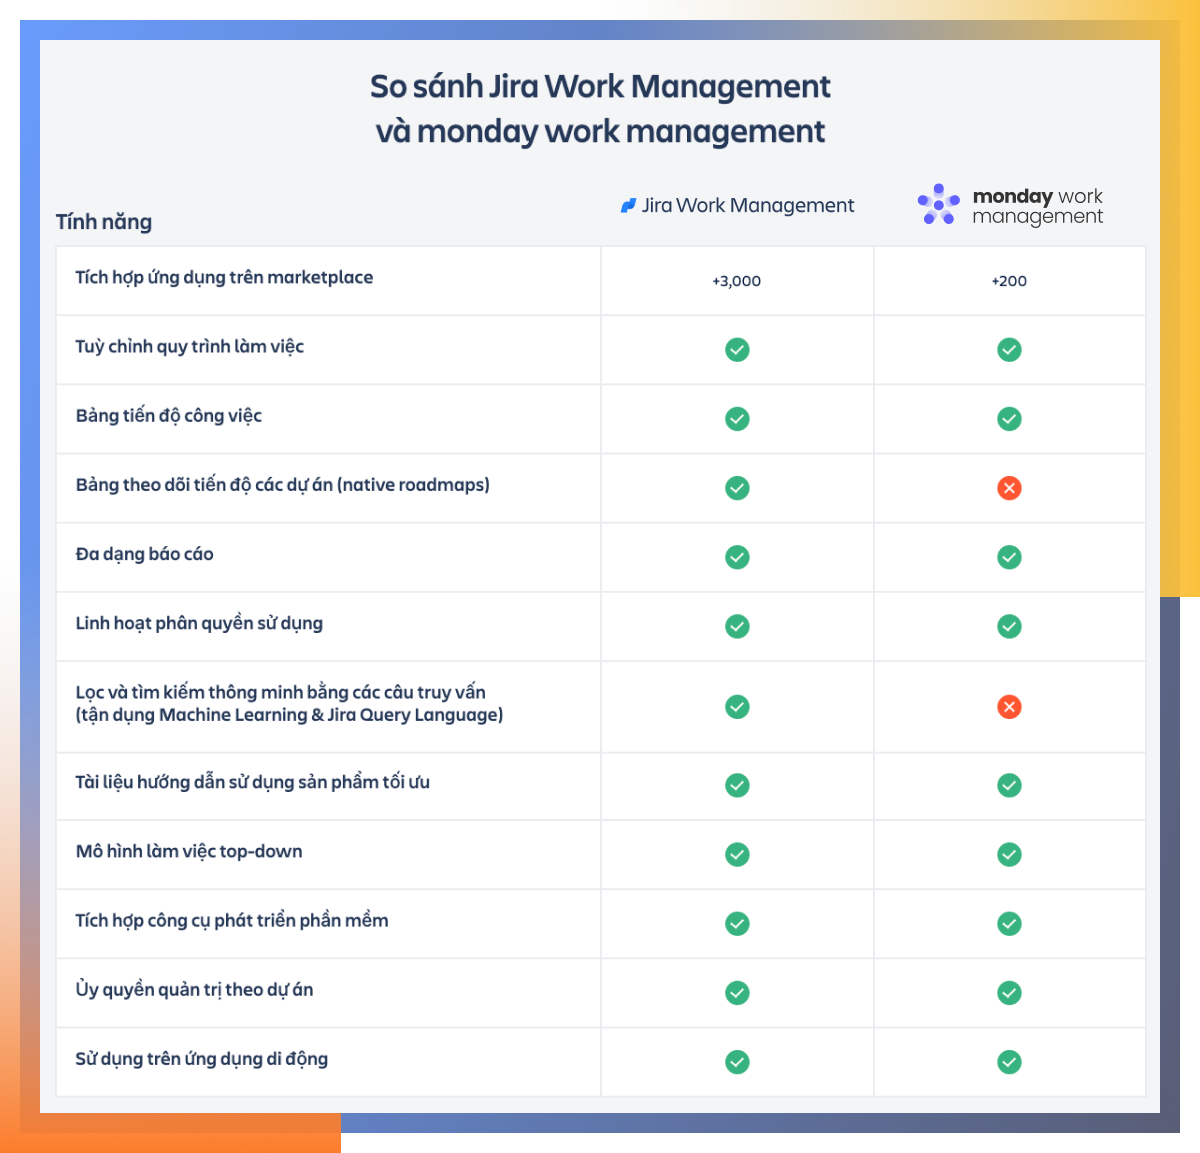 AgileOps - So sánh Jira Work Management và monday work management